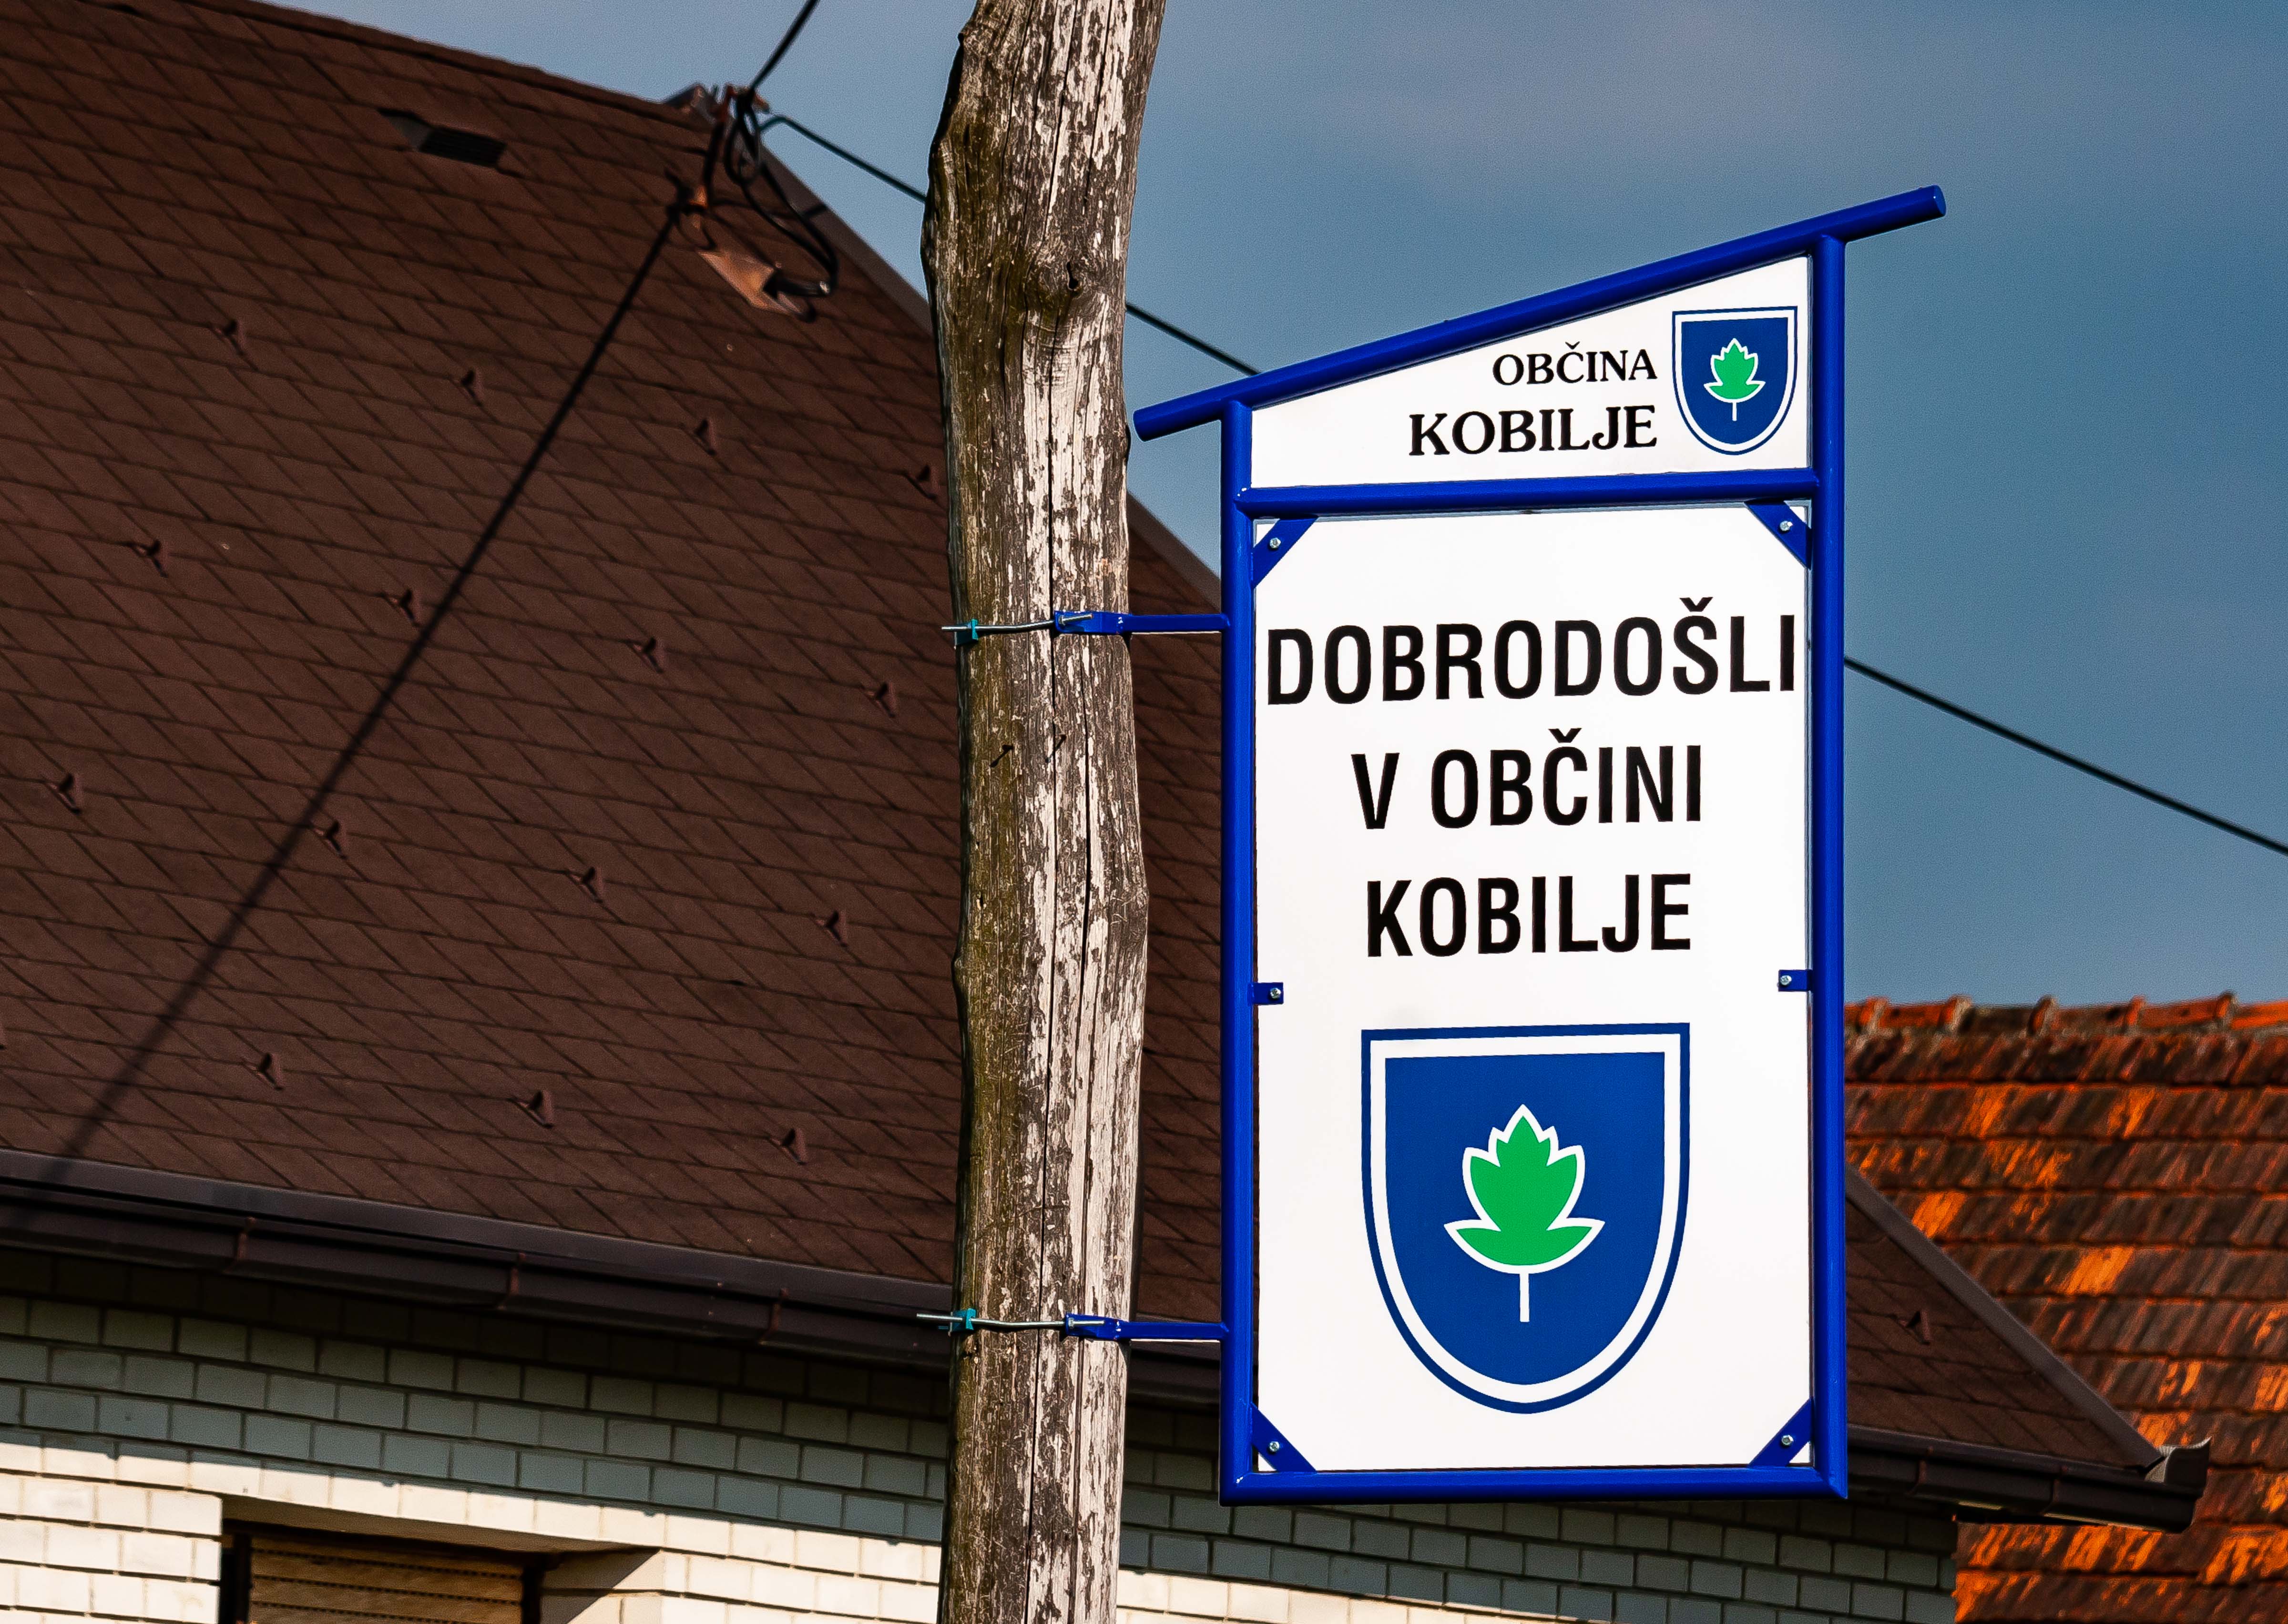 Slovenia, Kobilje Prov, Welcome To Kobilje Obcina, 2006, IMG 5234